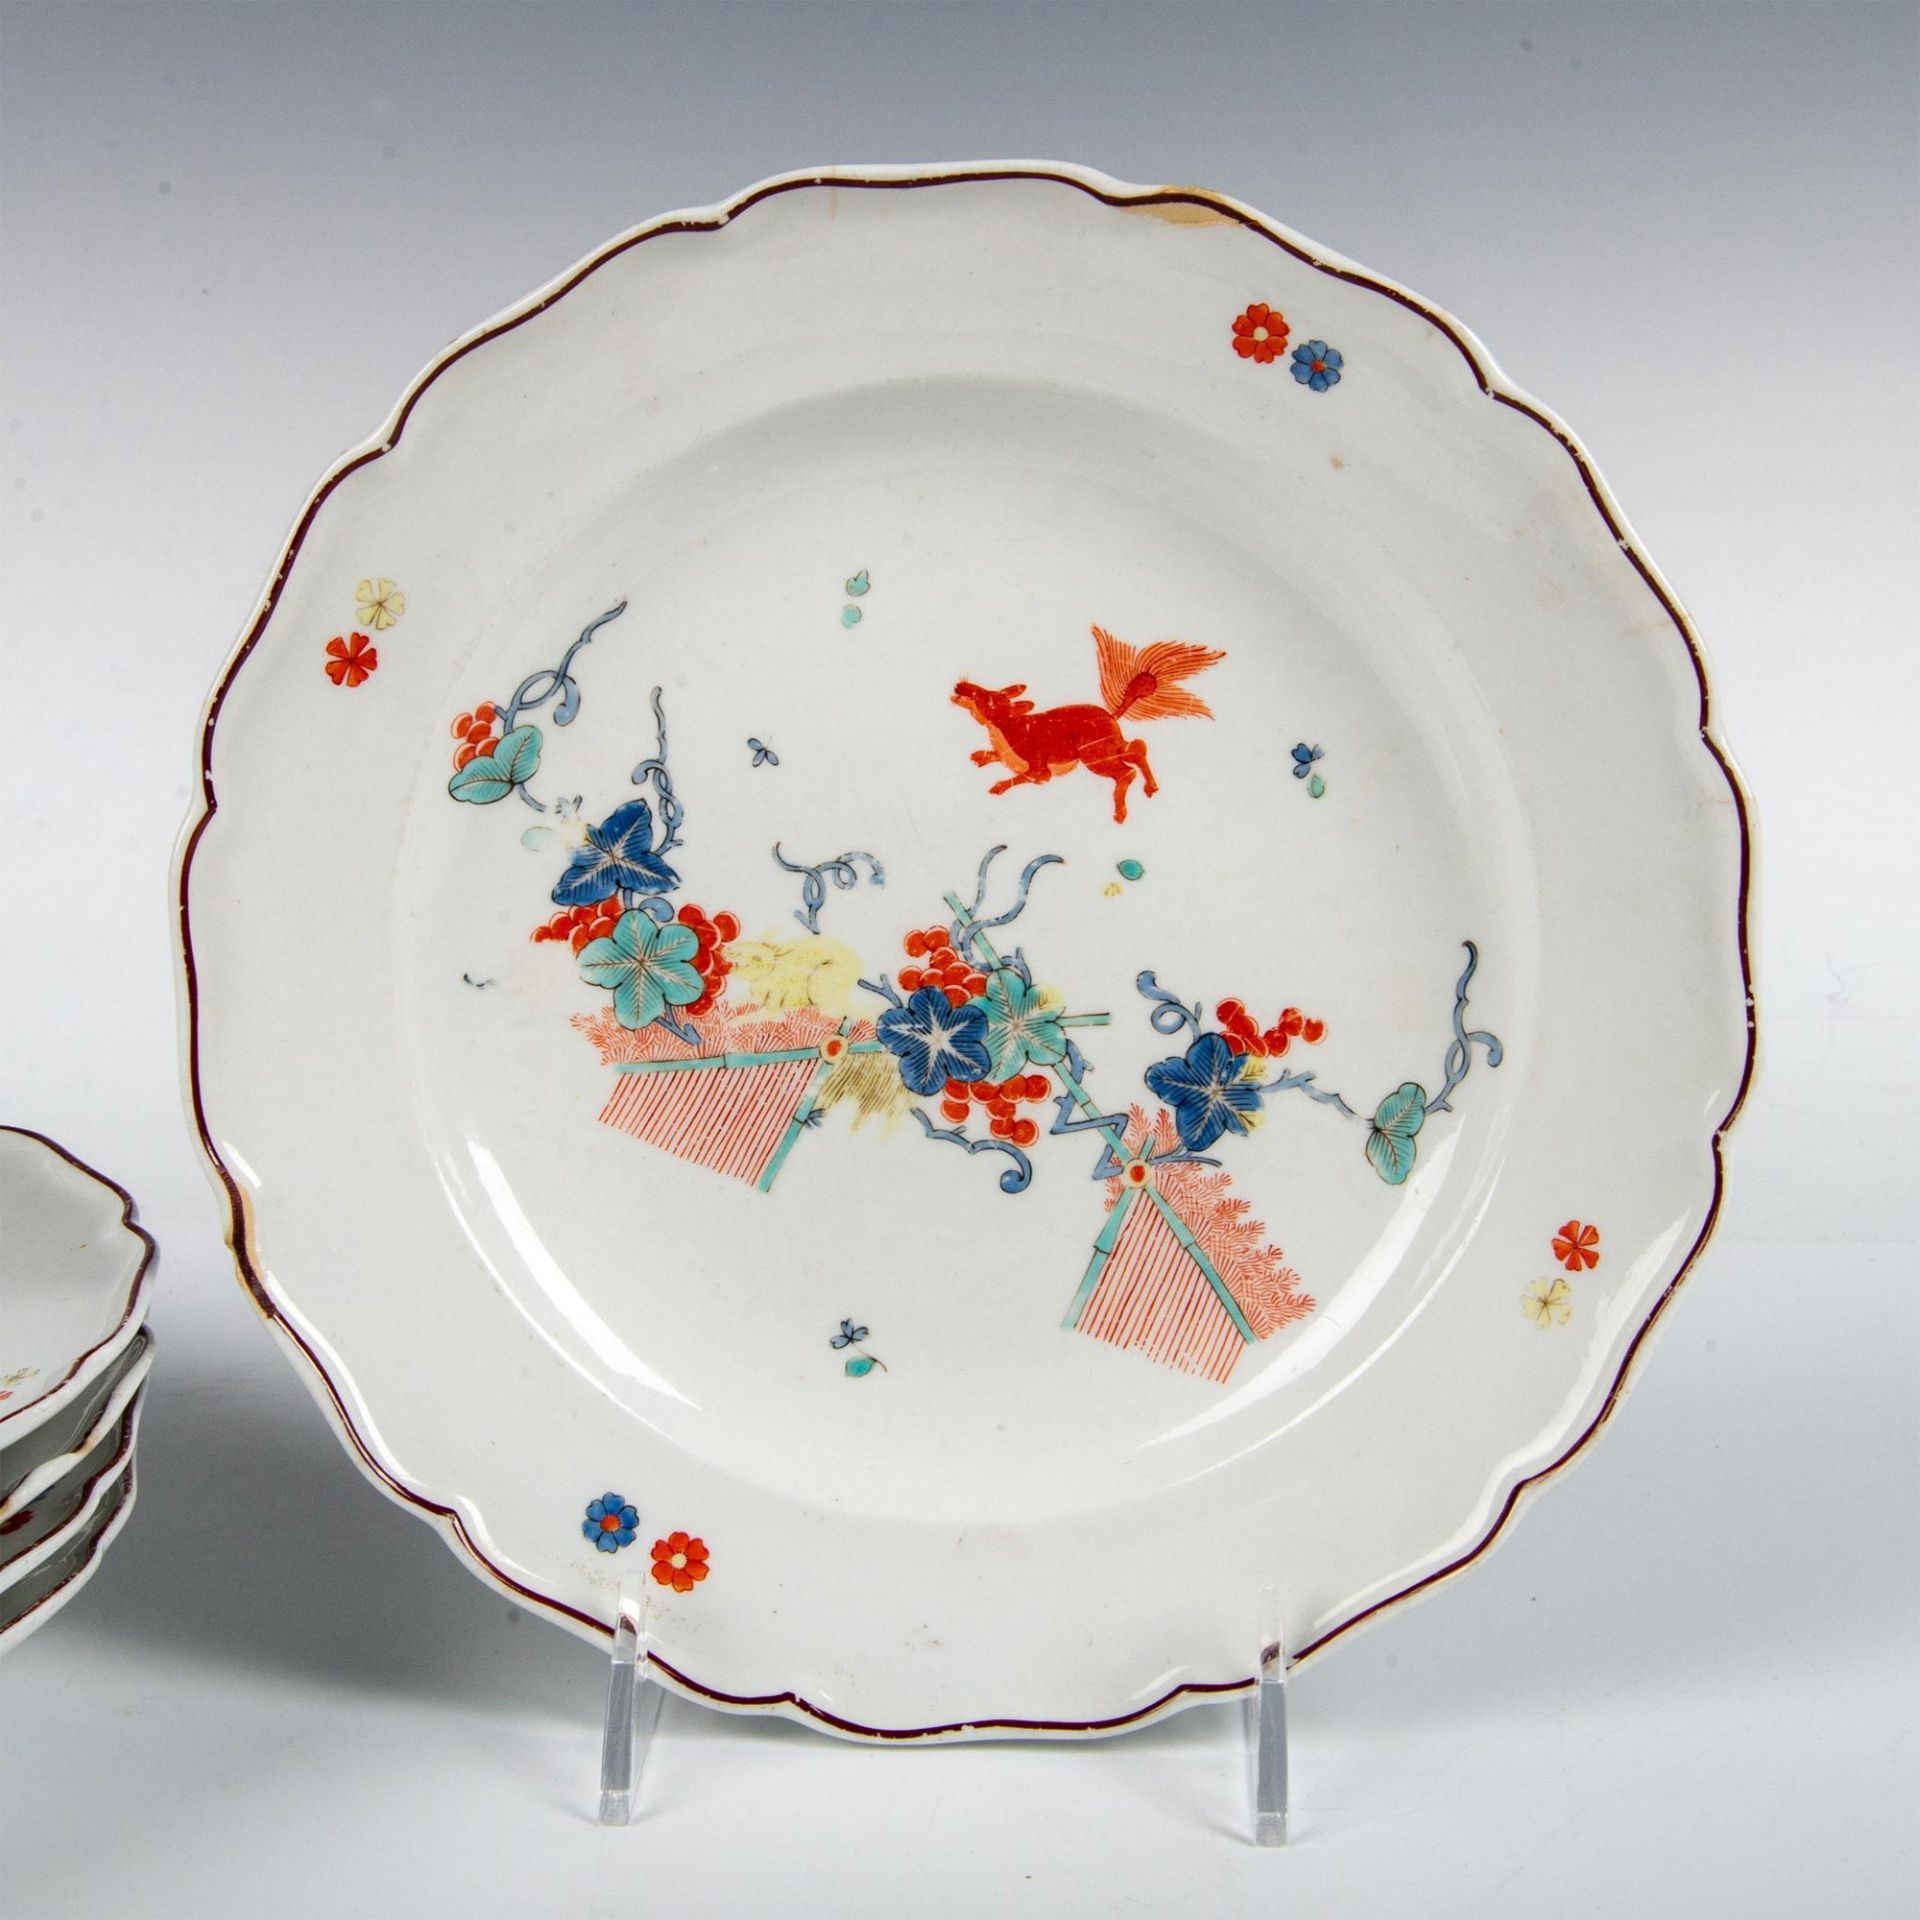 5pc Chamberlain's Worcester Porcelain Plates, Kakiemon - Image 2 of 6